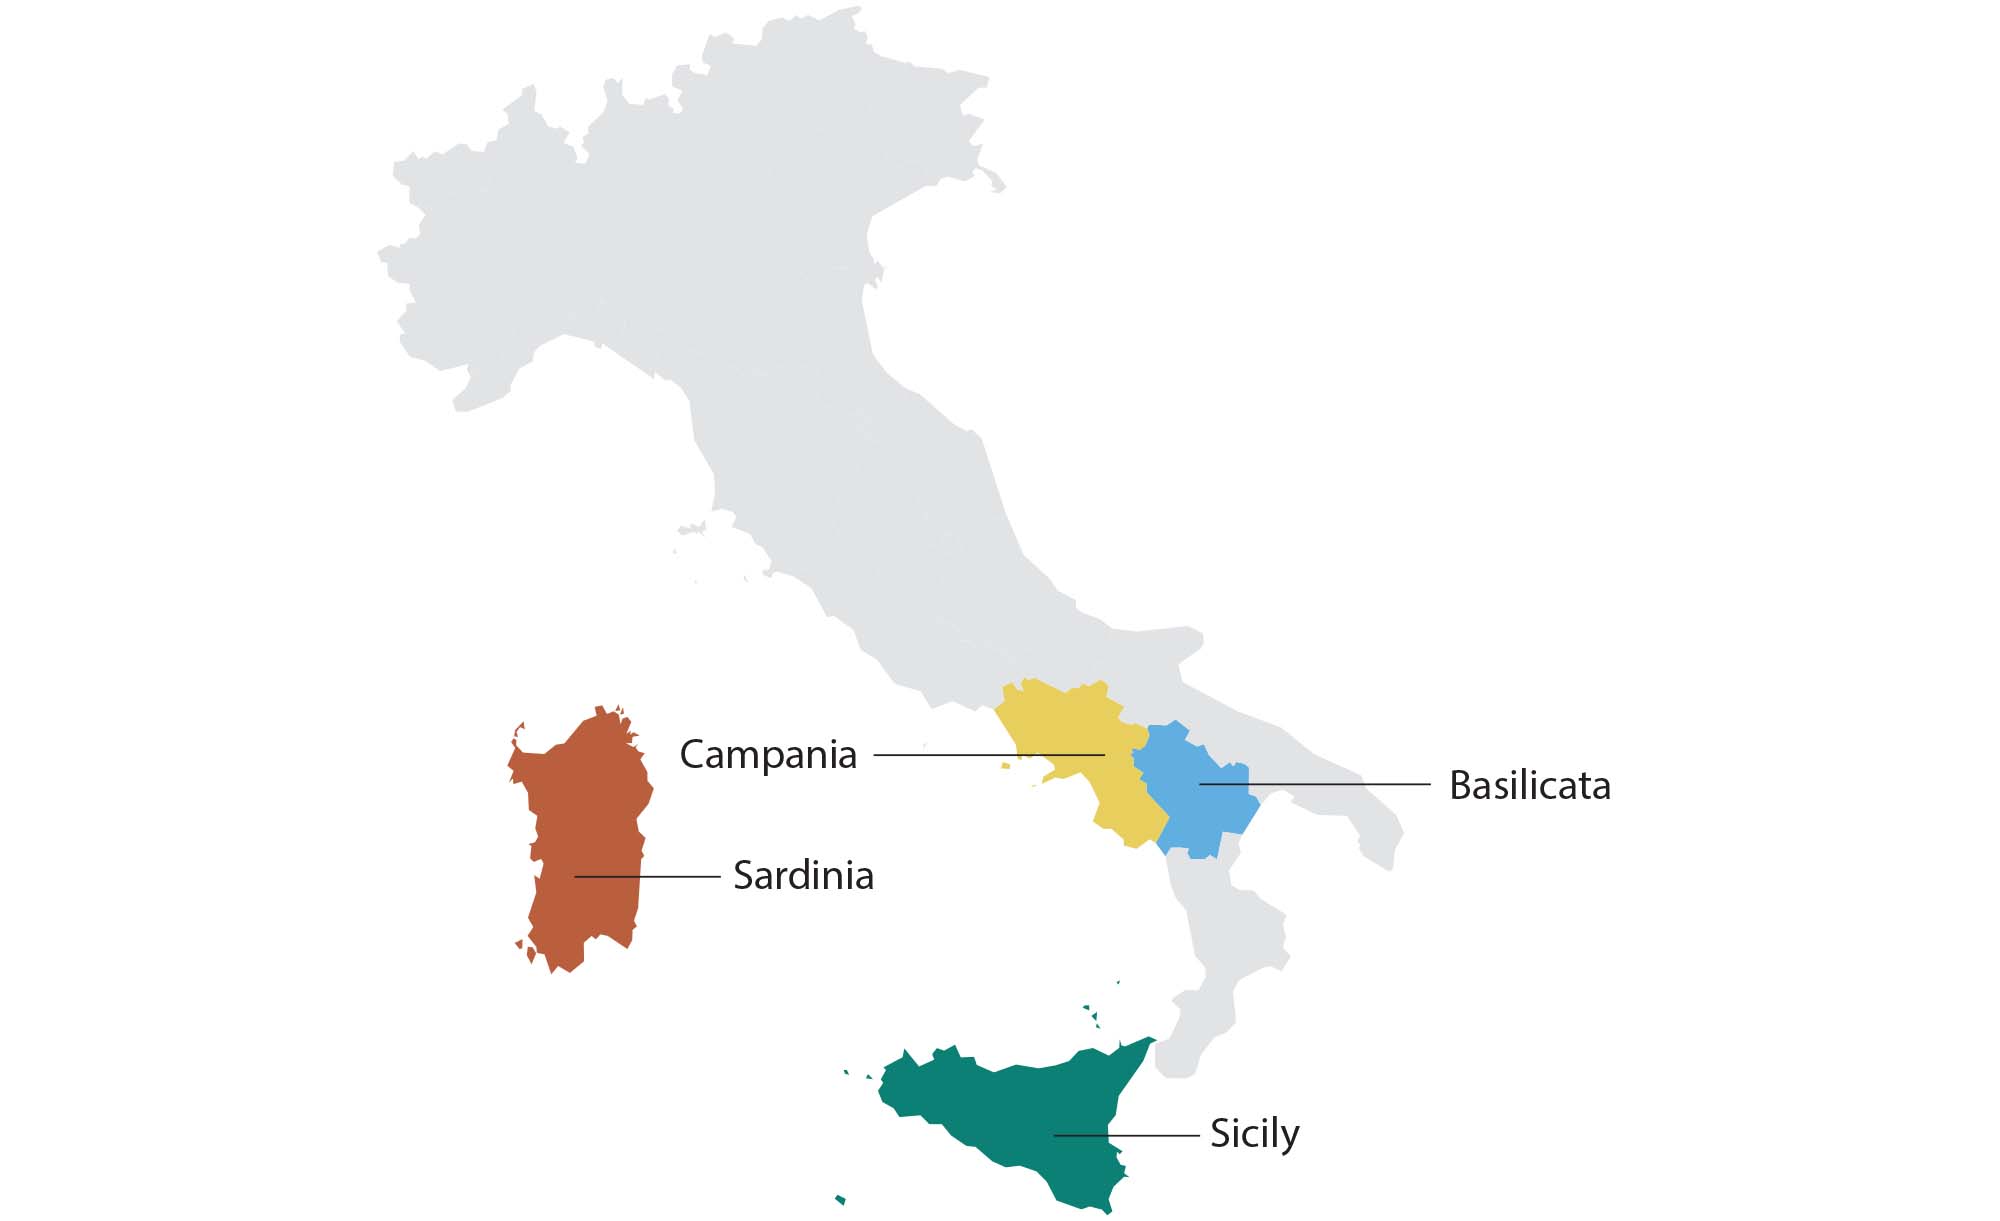 Southern Italy winemaking regions: Campania, Sardinia, Sicily, and Basilicata